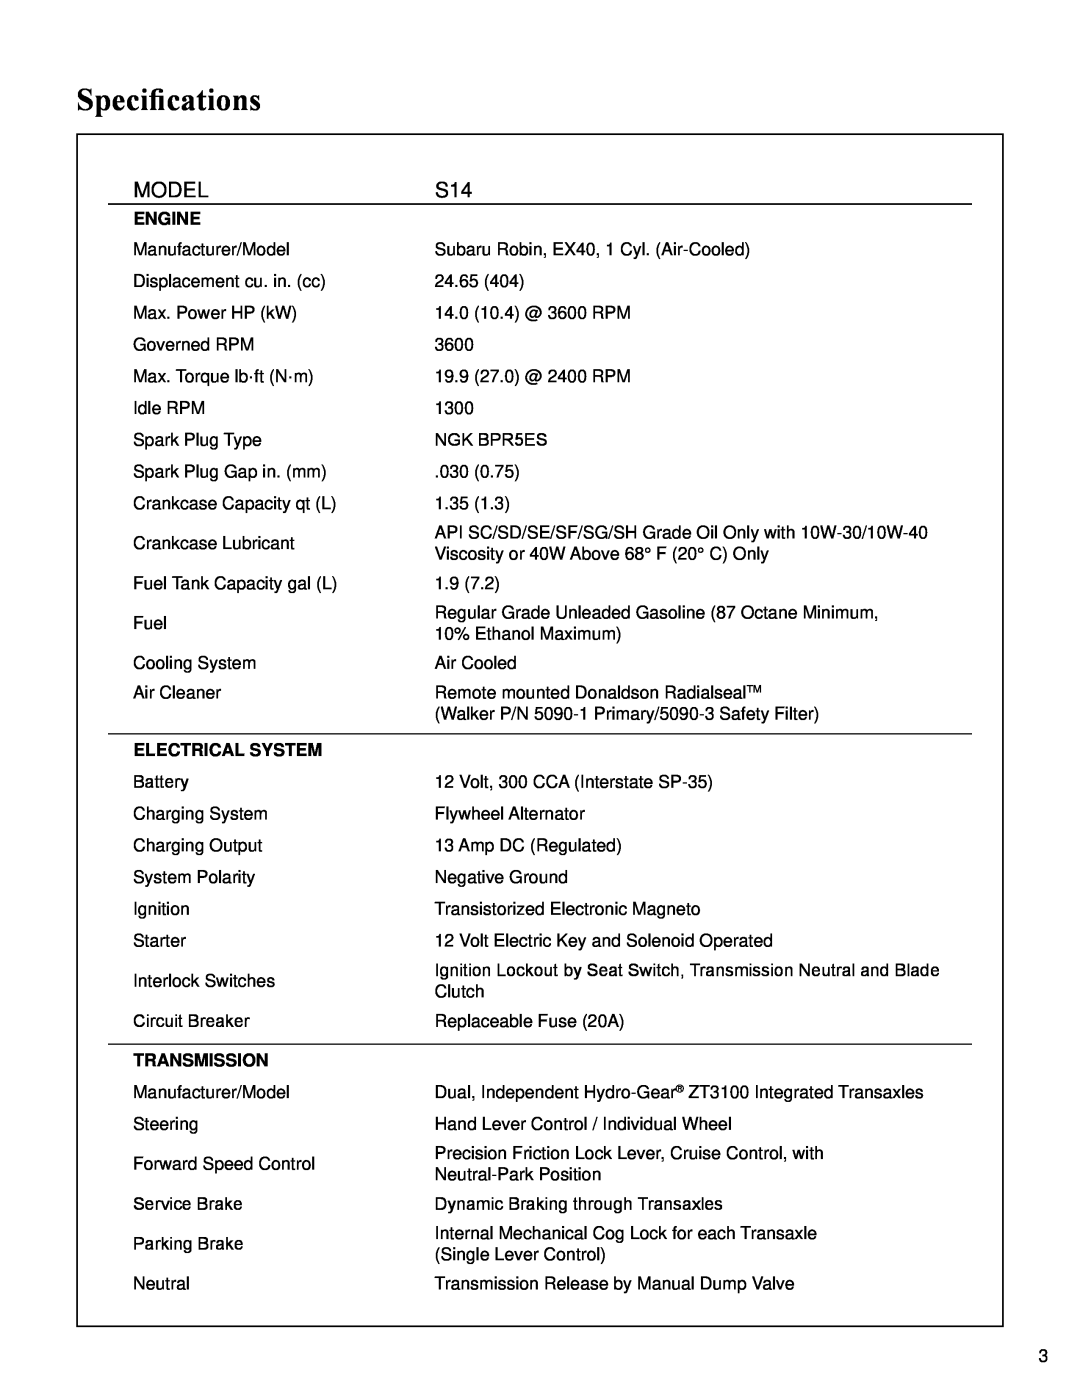 Walker S14 manual Specifications, Model, Engine, Electrical System, Transmission 